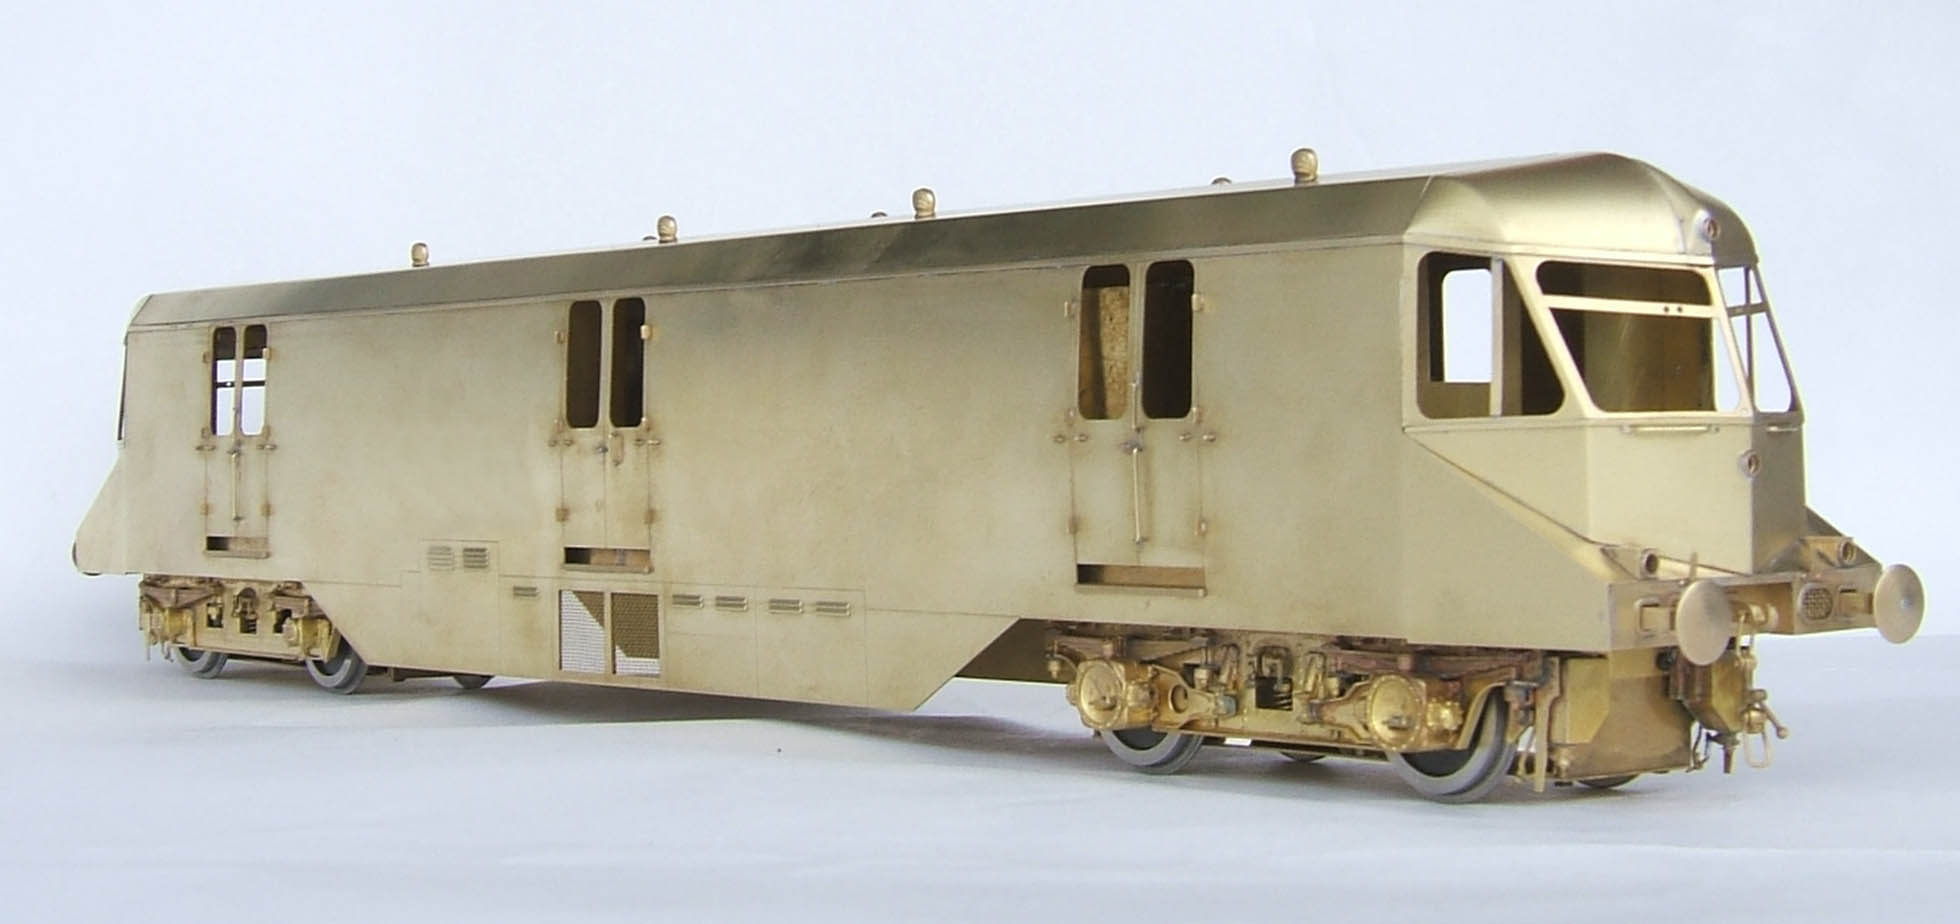 Final test sample images of the Parcels Railcar